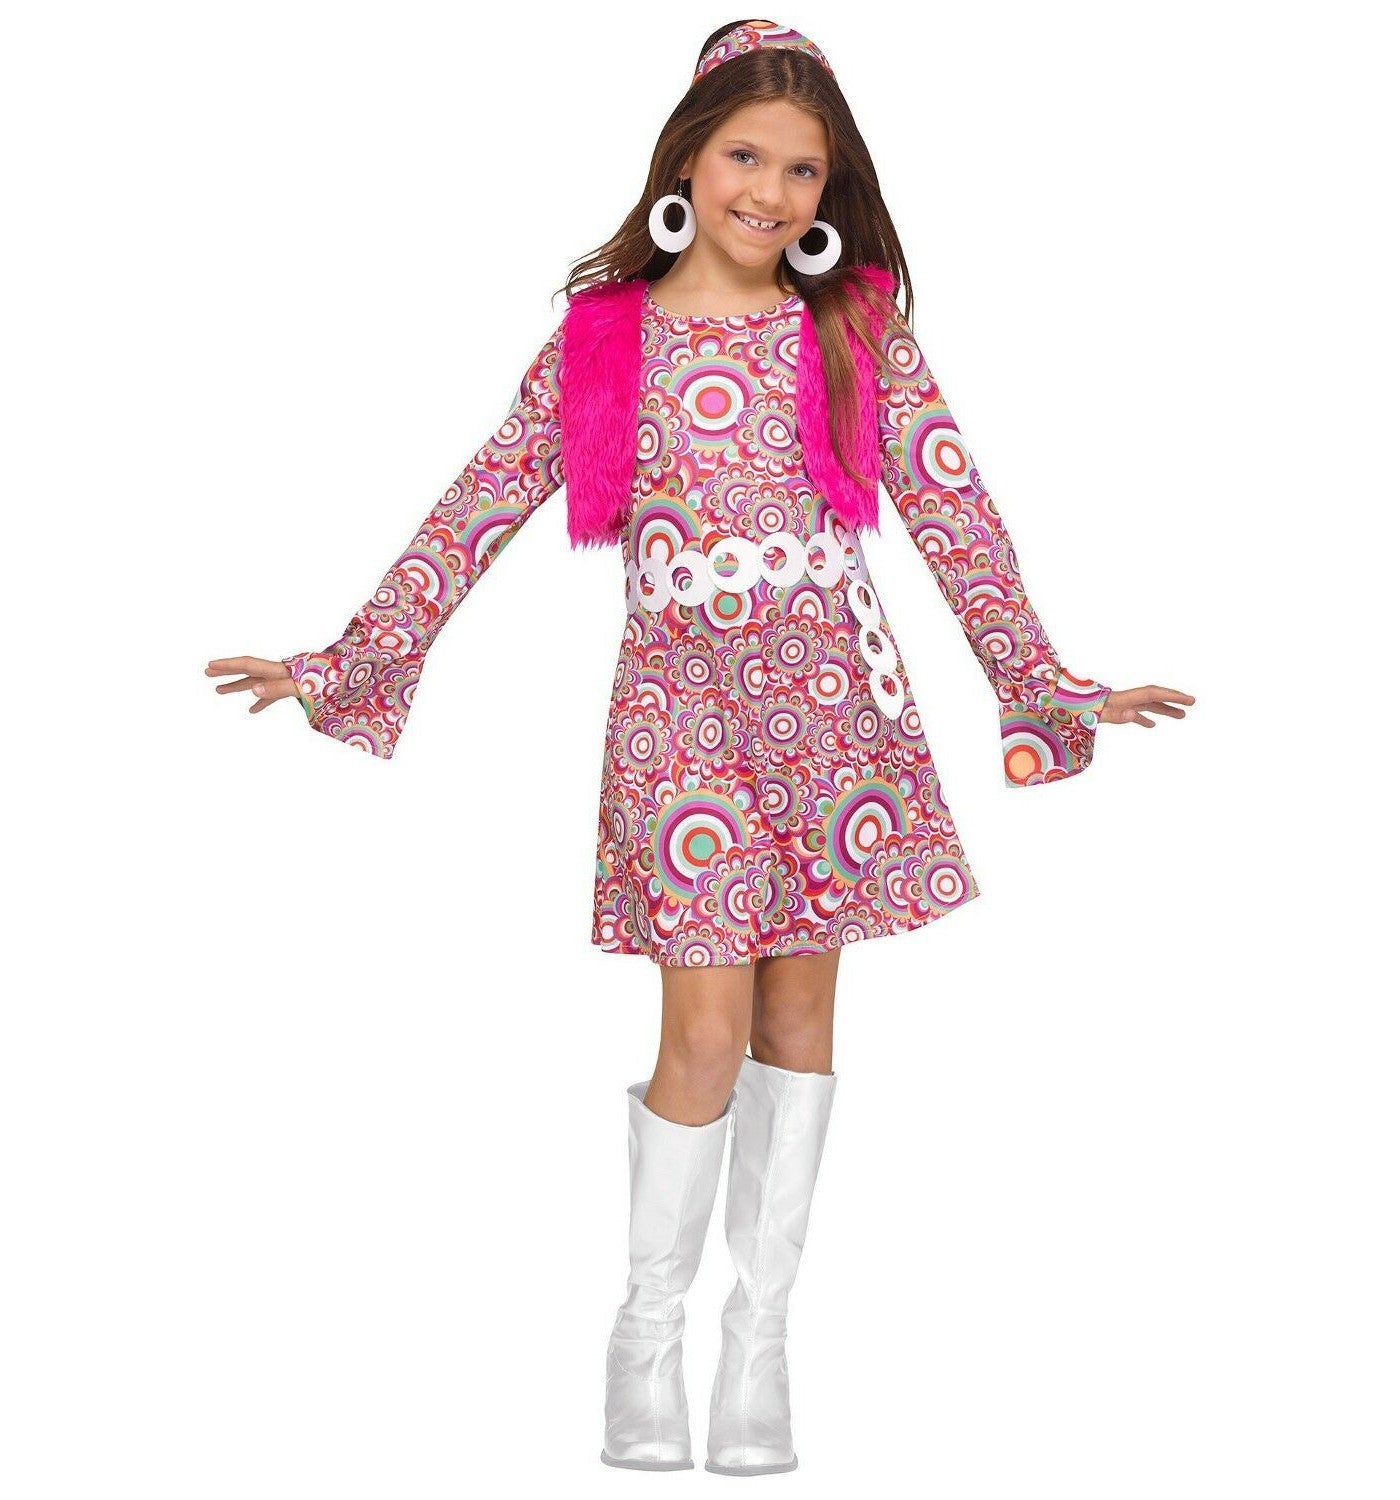 Groovy 60's Mod Hippie Shaggy Chic Child Costume, Pink